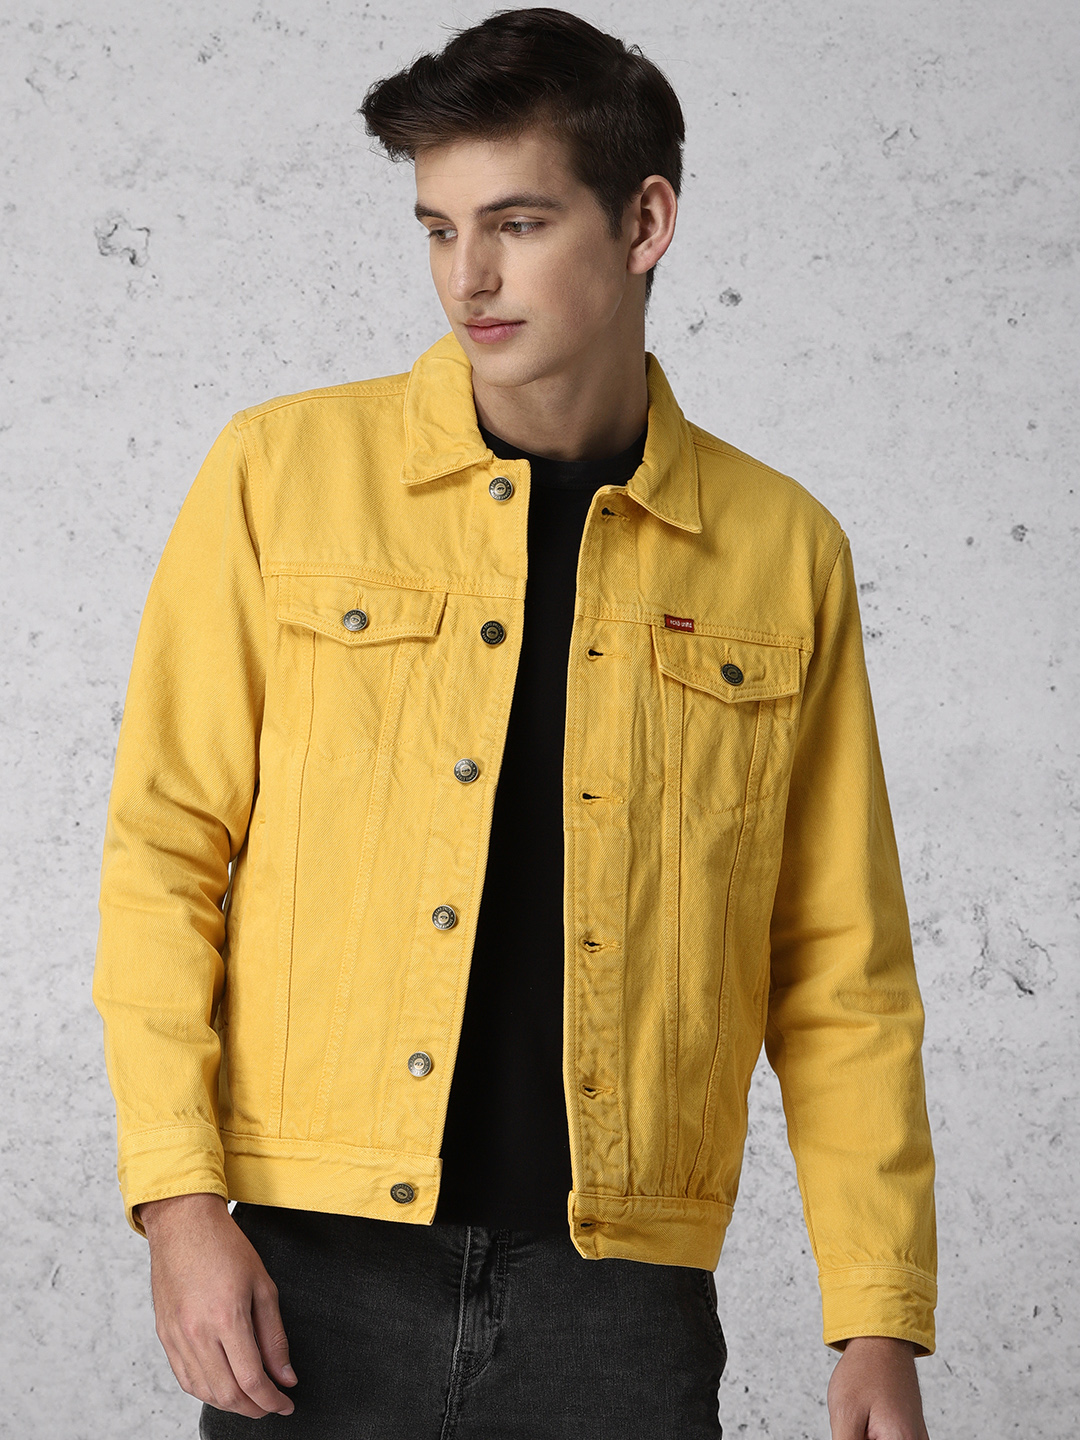 mustard yellow denim jacket